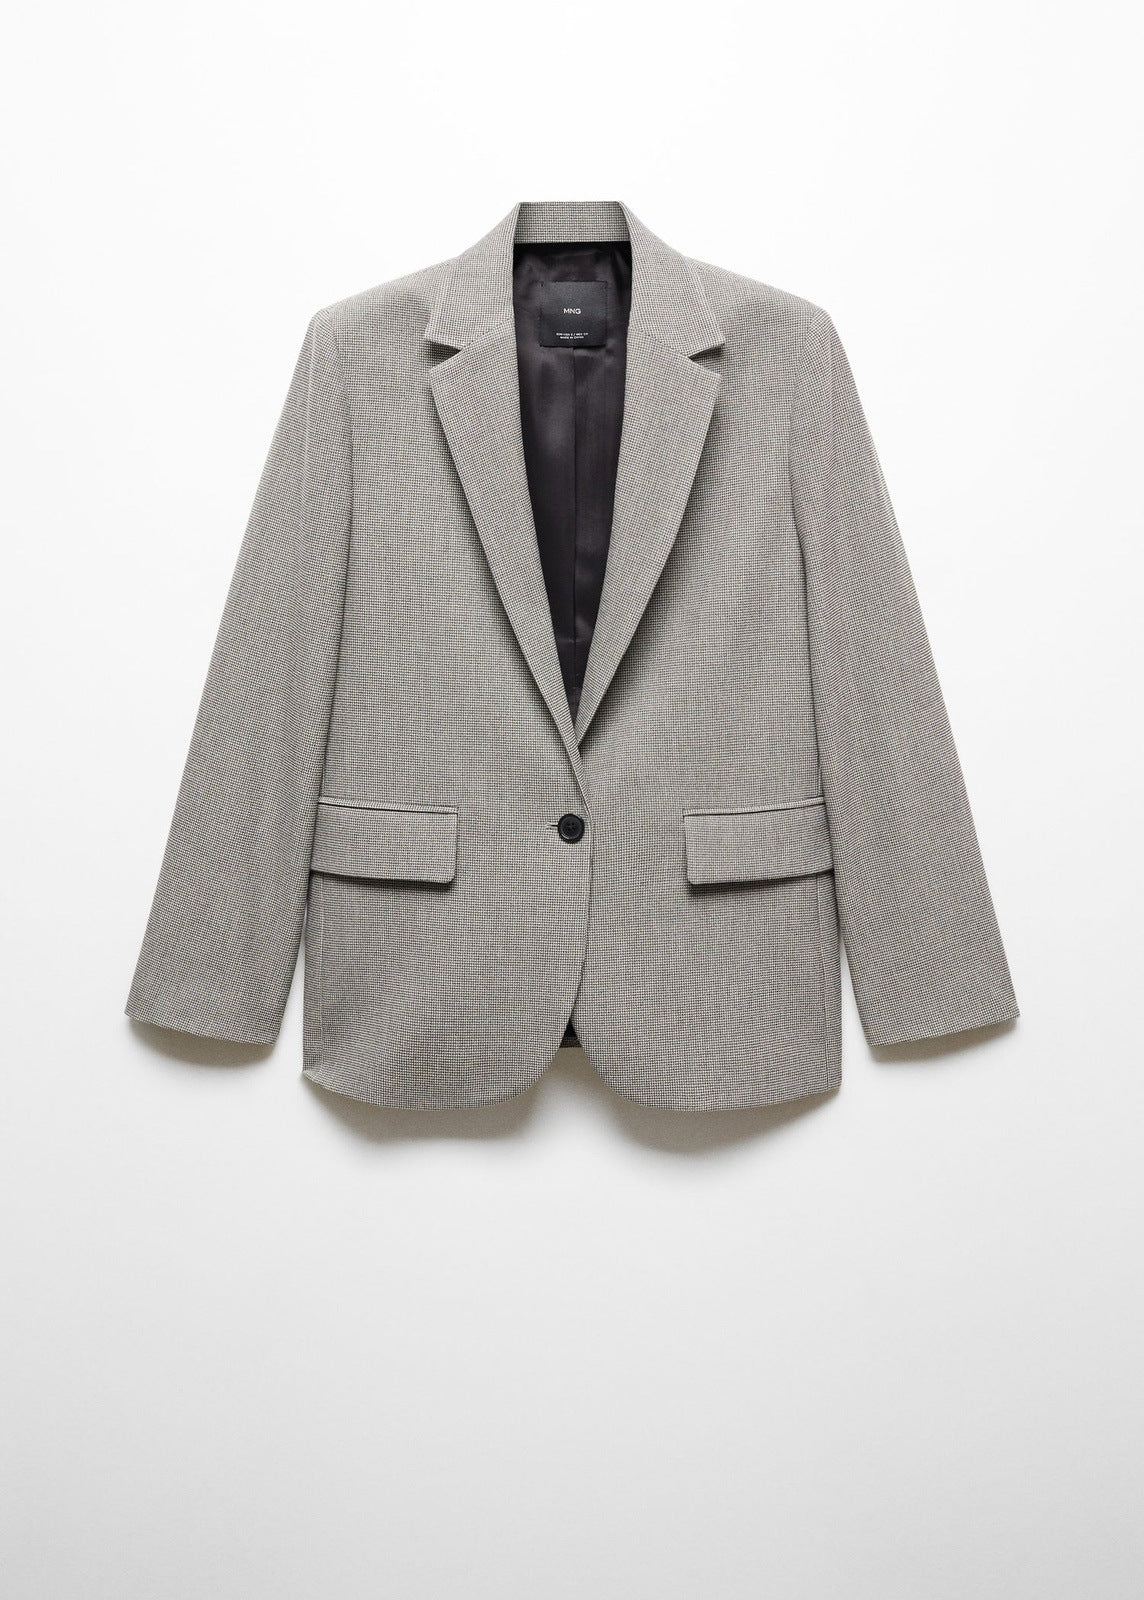 Mango Lapels Houndstooth suit blazer 1 Shaws Department Stores